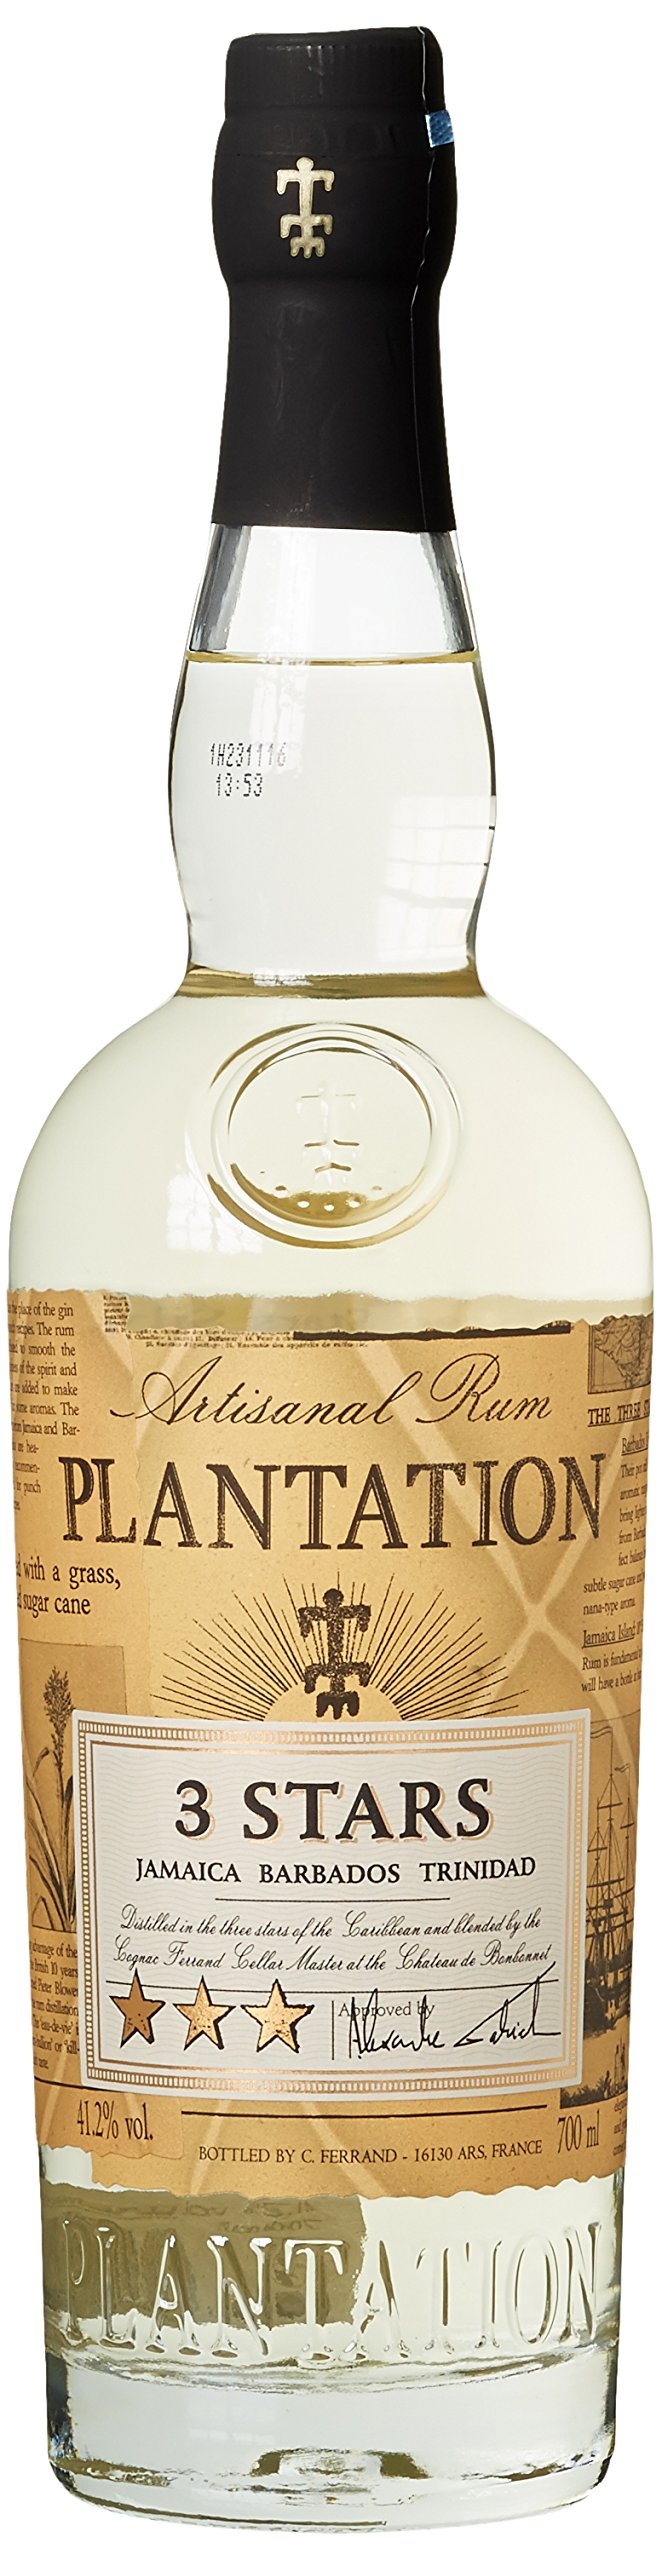 plantation 3 stars